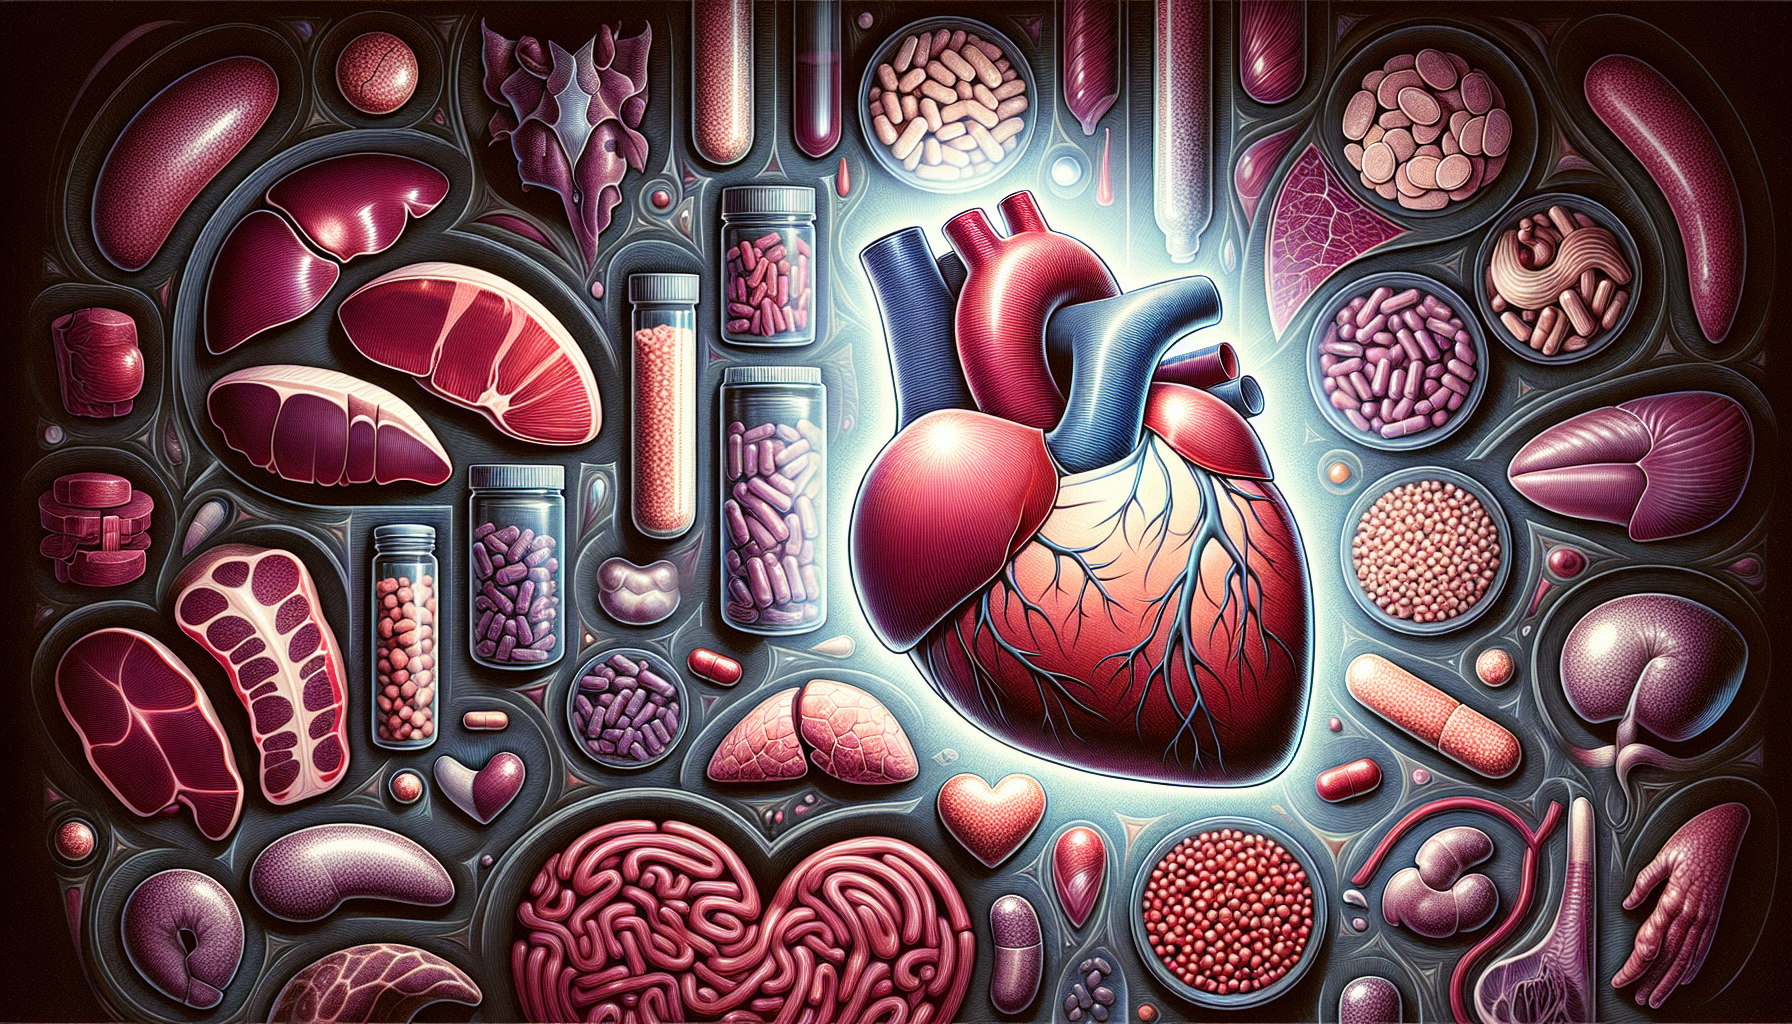 Illustration of beef organ supplements